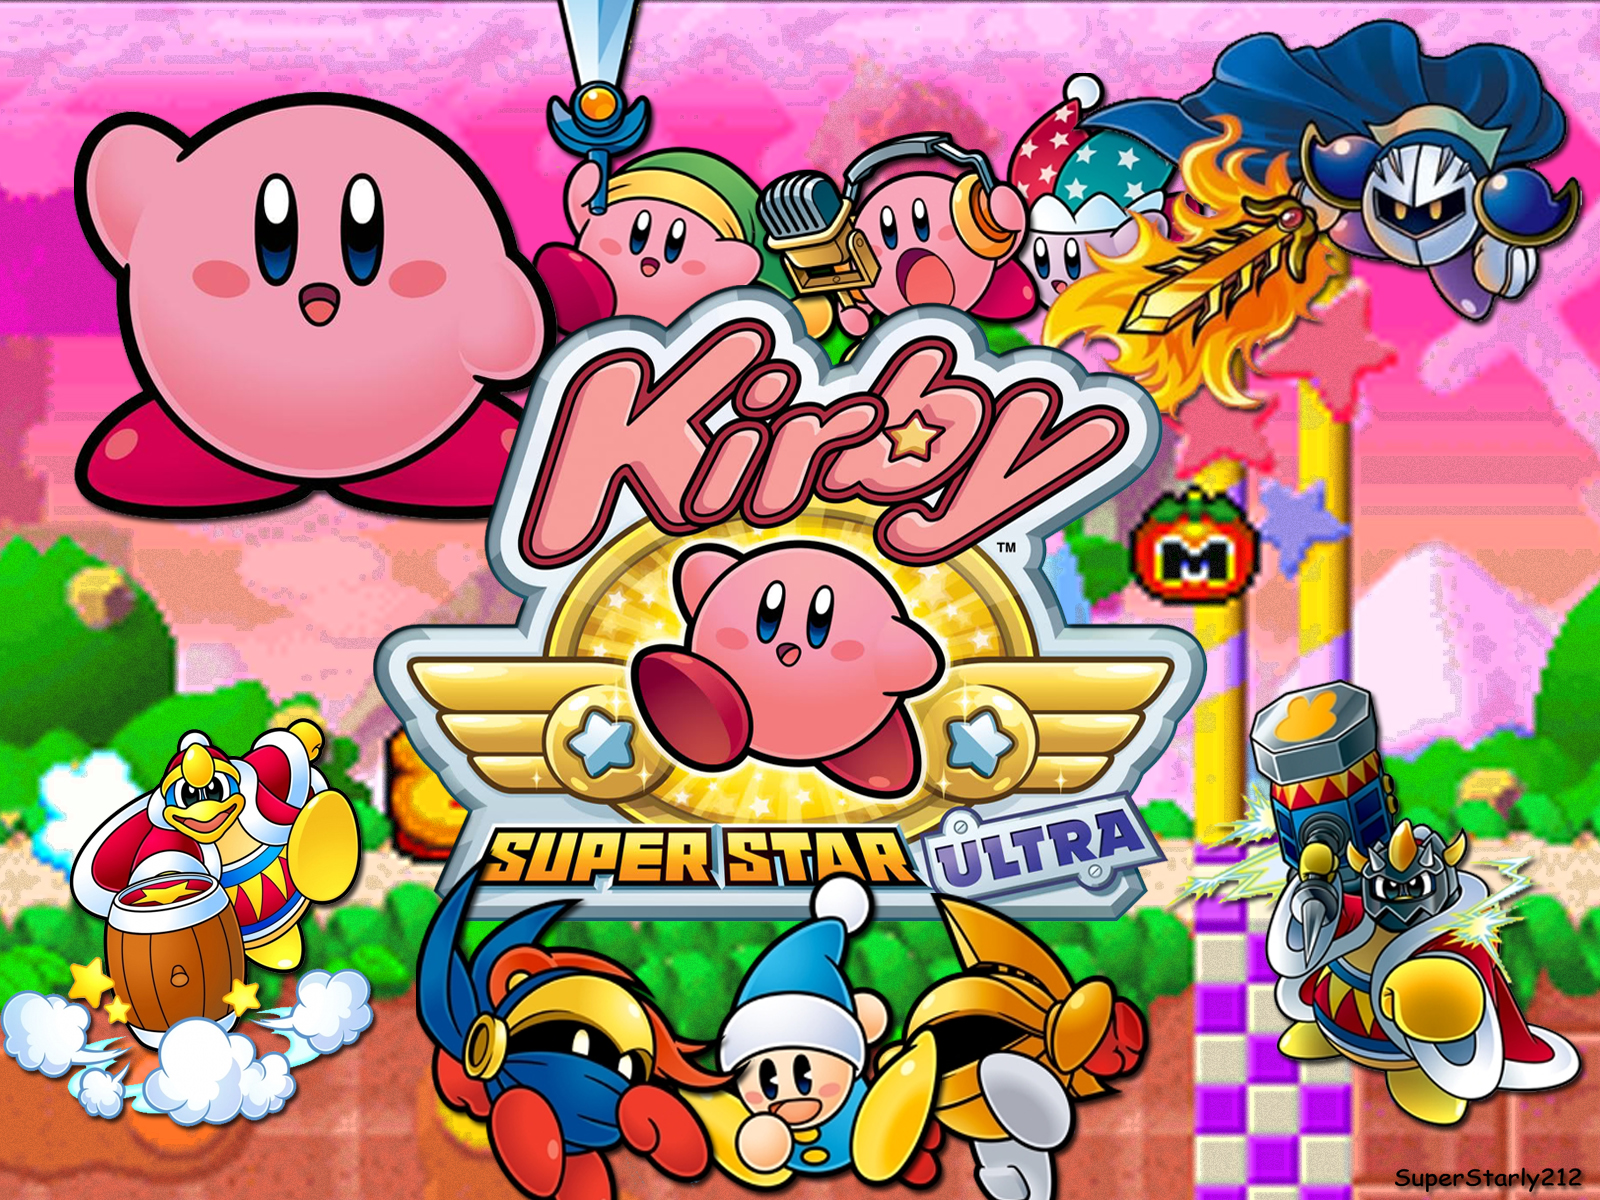 46+] Kirby Super Star Ultra Wallpaper - WallpaperSafari